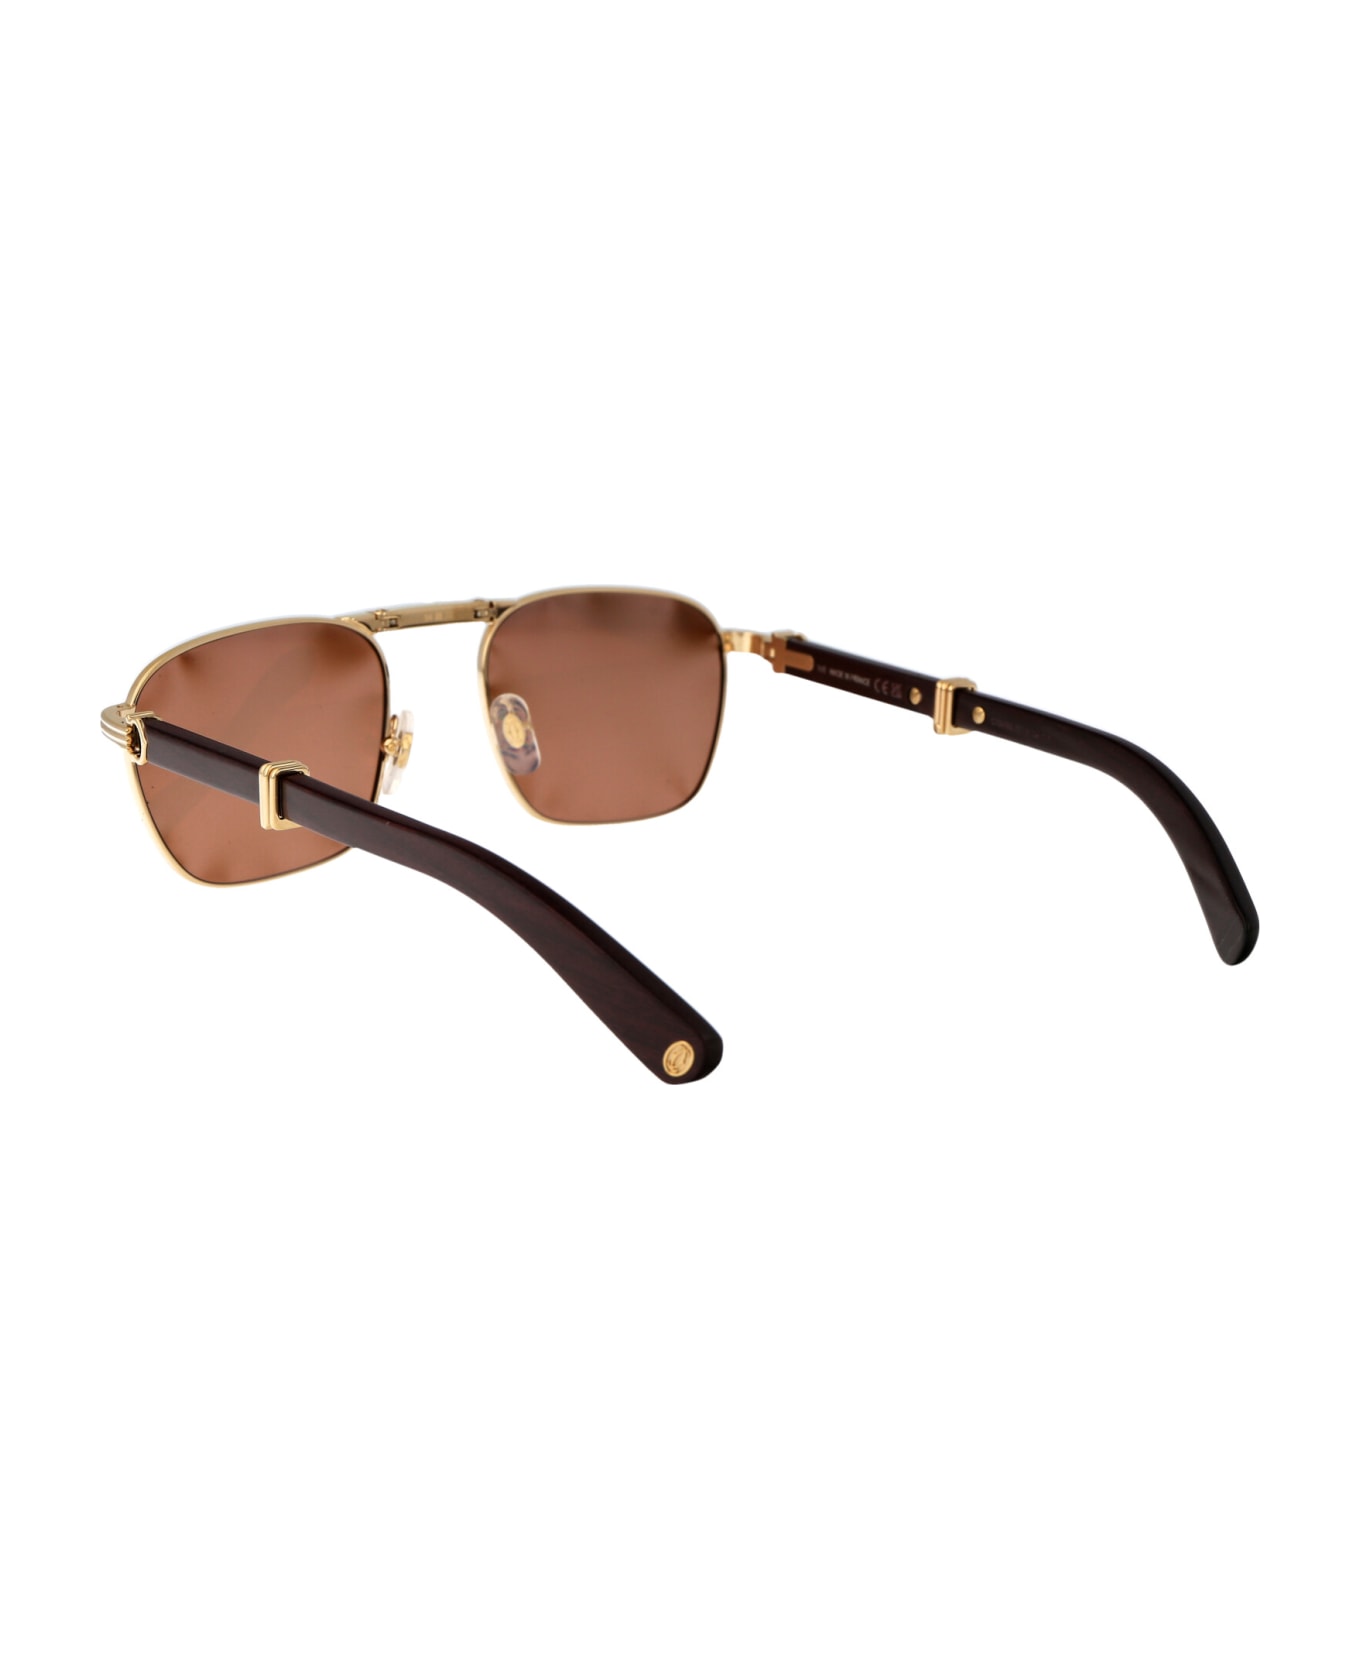 Cartier Eyewear Ct0428s Sunglasses - 001 GOLD BURGUNDY BROWN